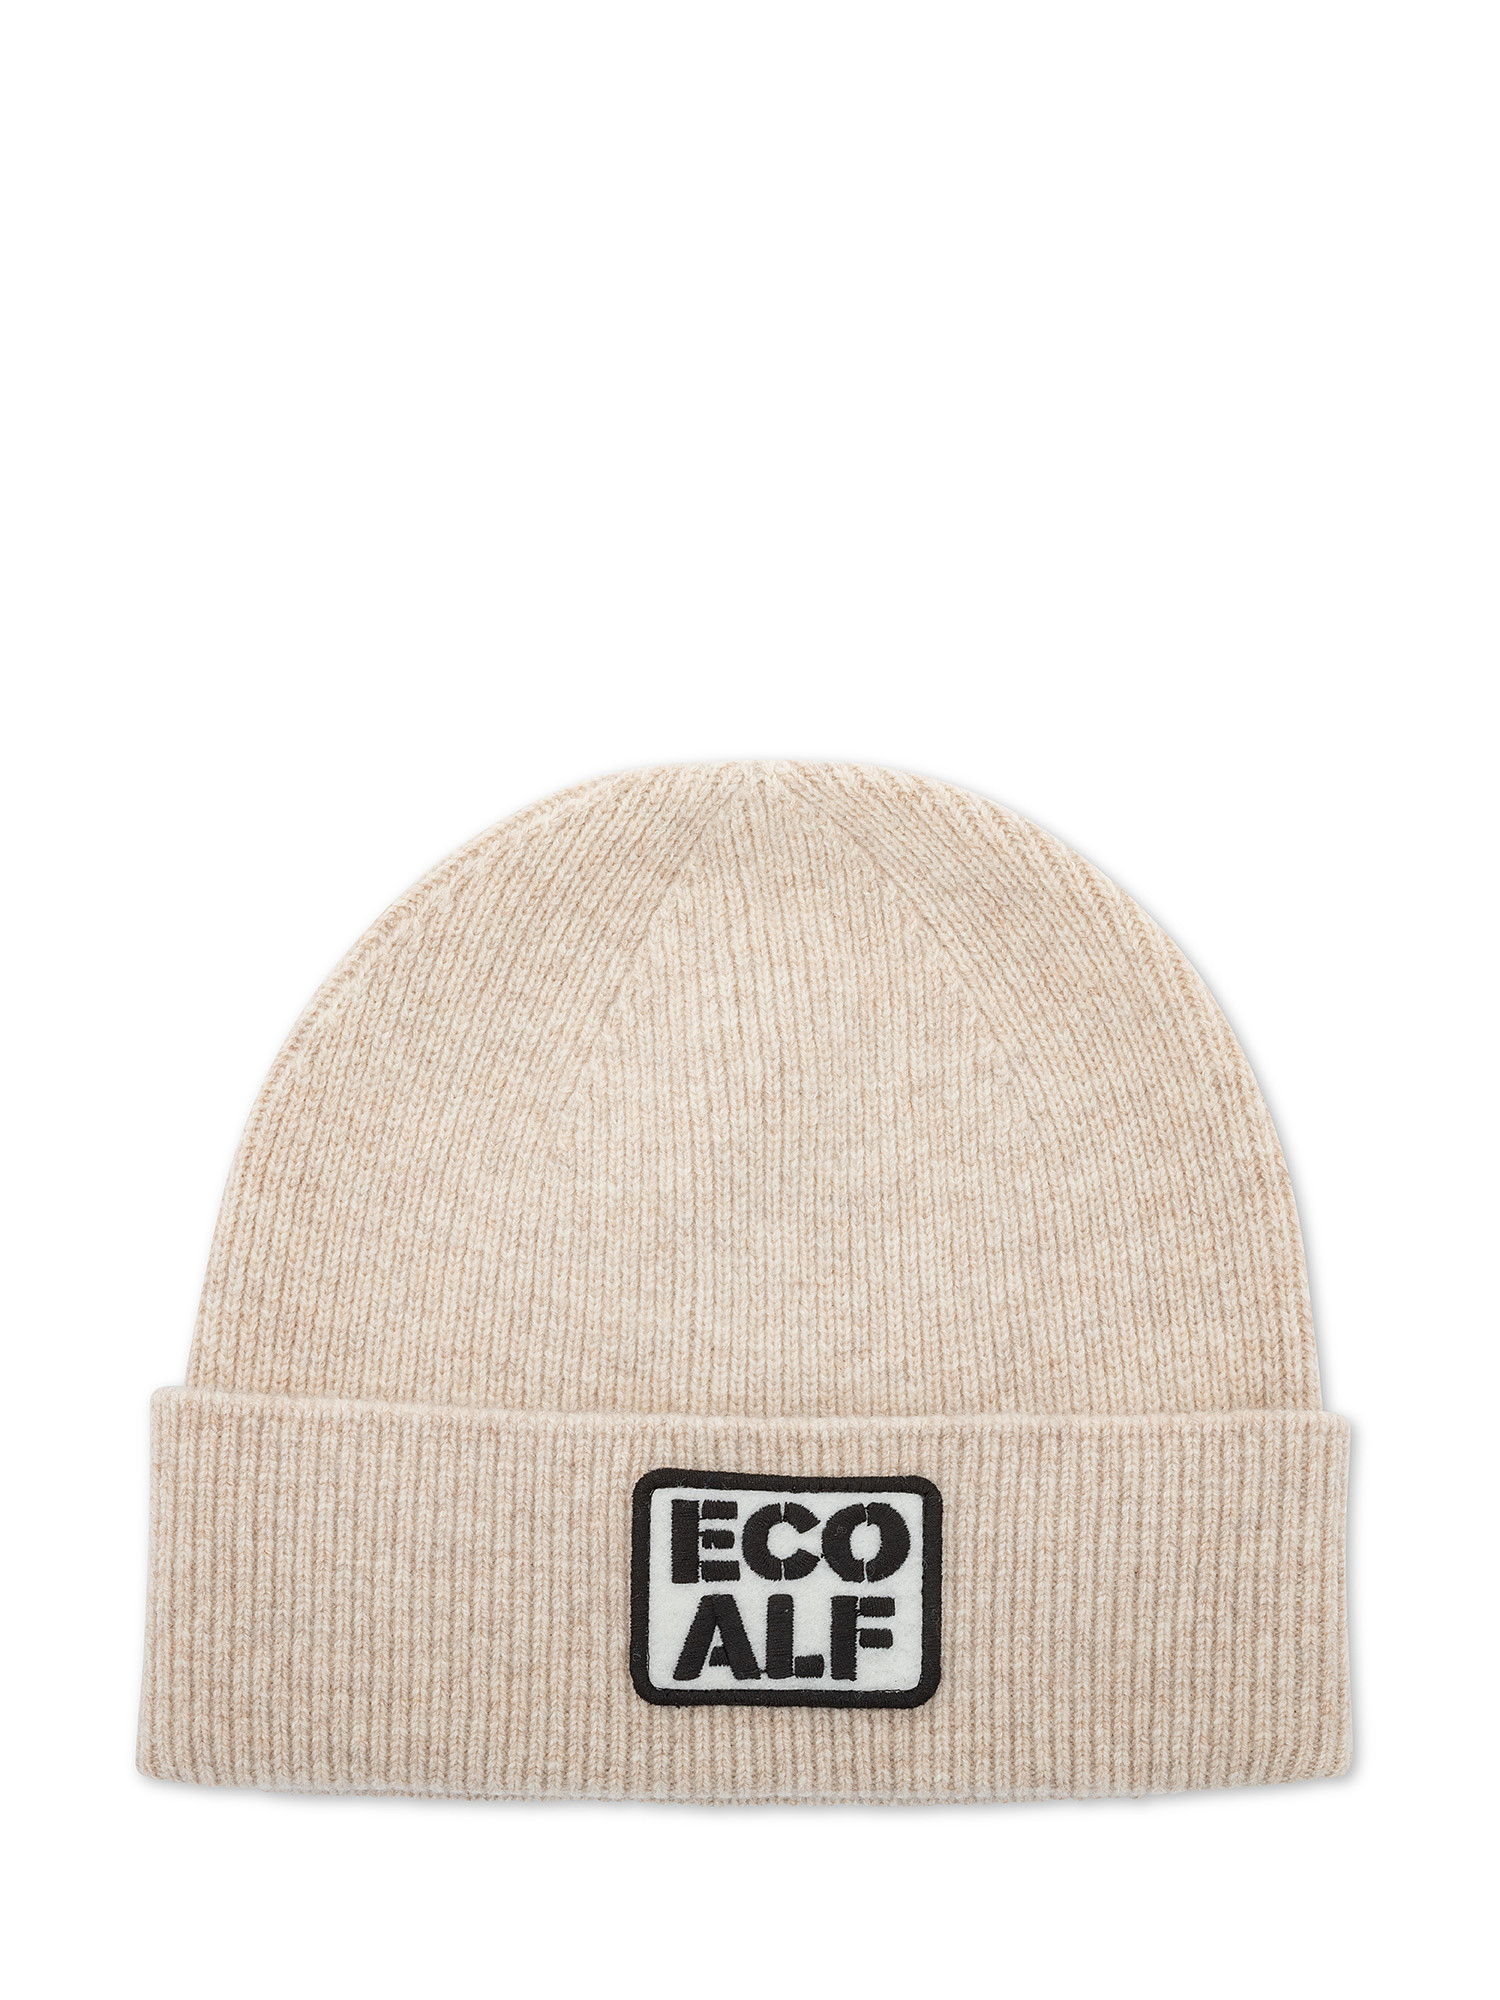 Ecoalf - Hat with logo, Light Beige, large image number 0